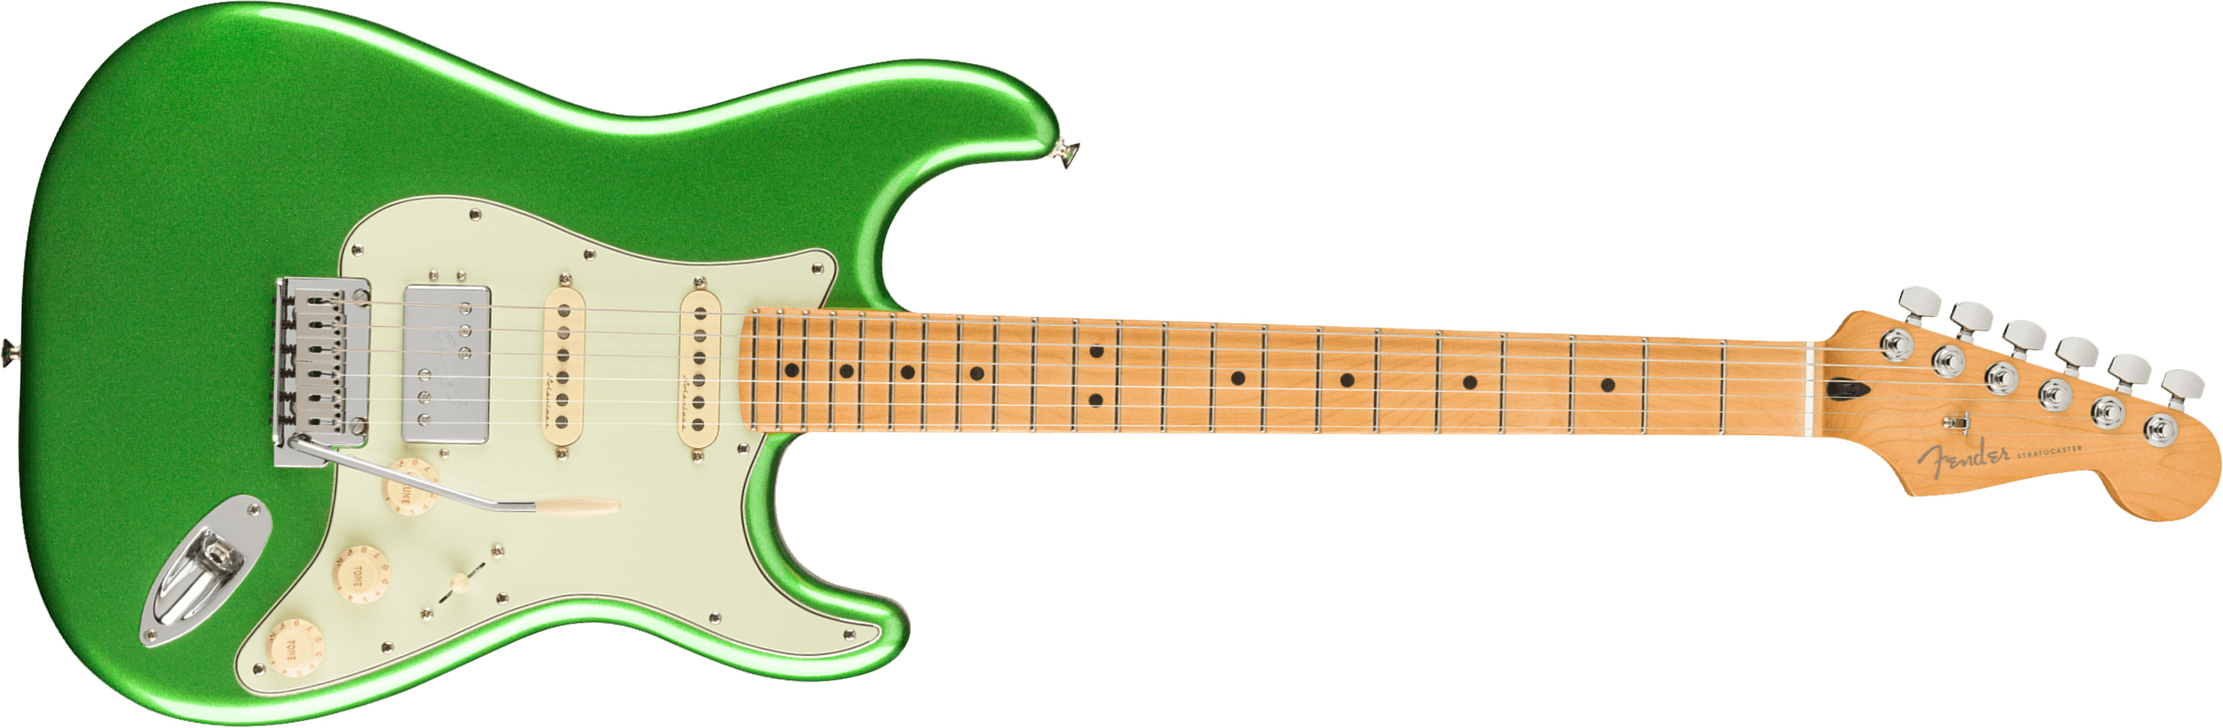 Fender Strat Player Plus Mex Hss Trem Mn - Cosmic Jade - Str shape electric guitar - Main picture